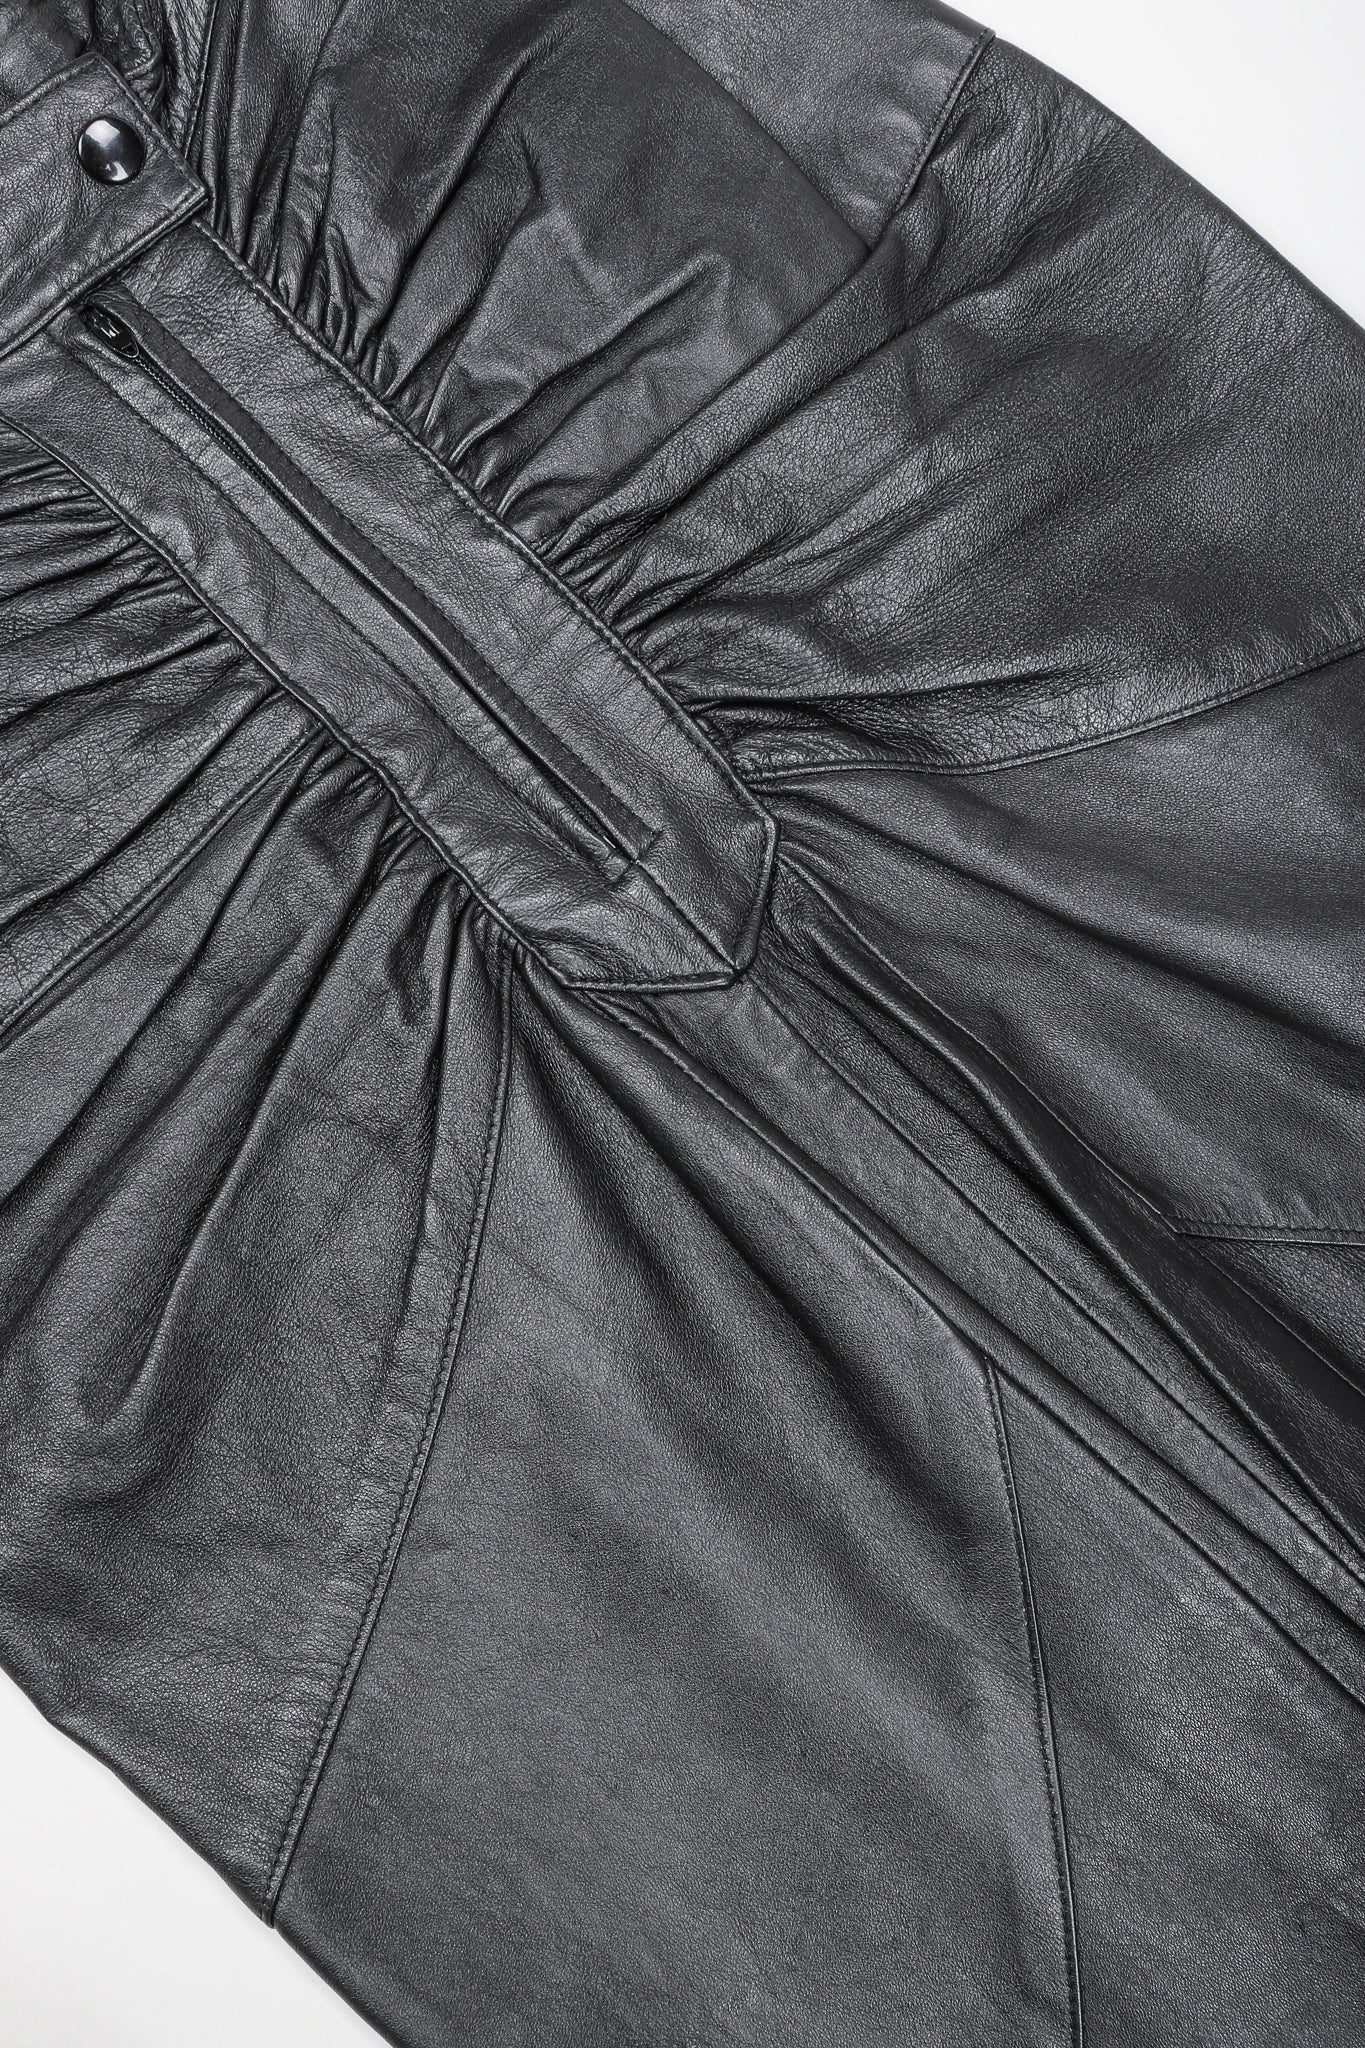 Dero Enterprises Black Leather Skirt, Front Detail On White Background at Recess Vintage